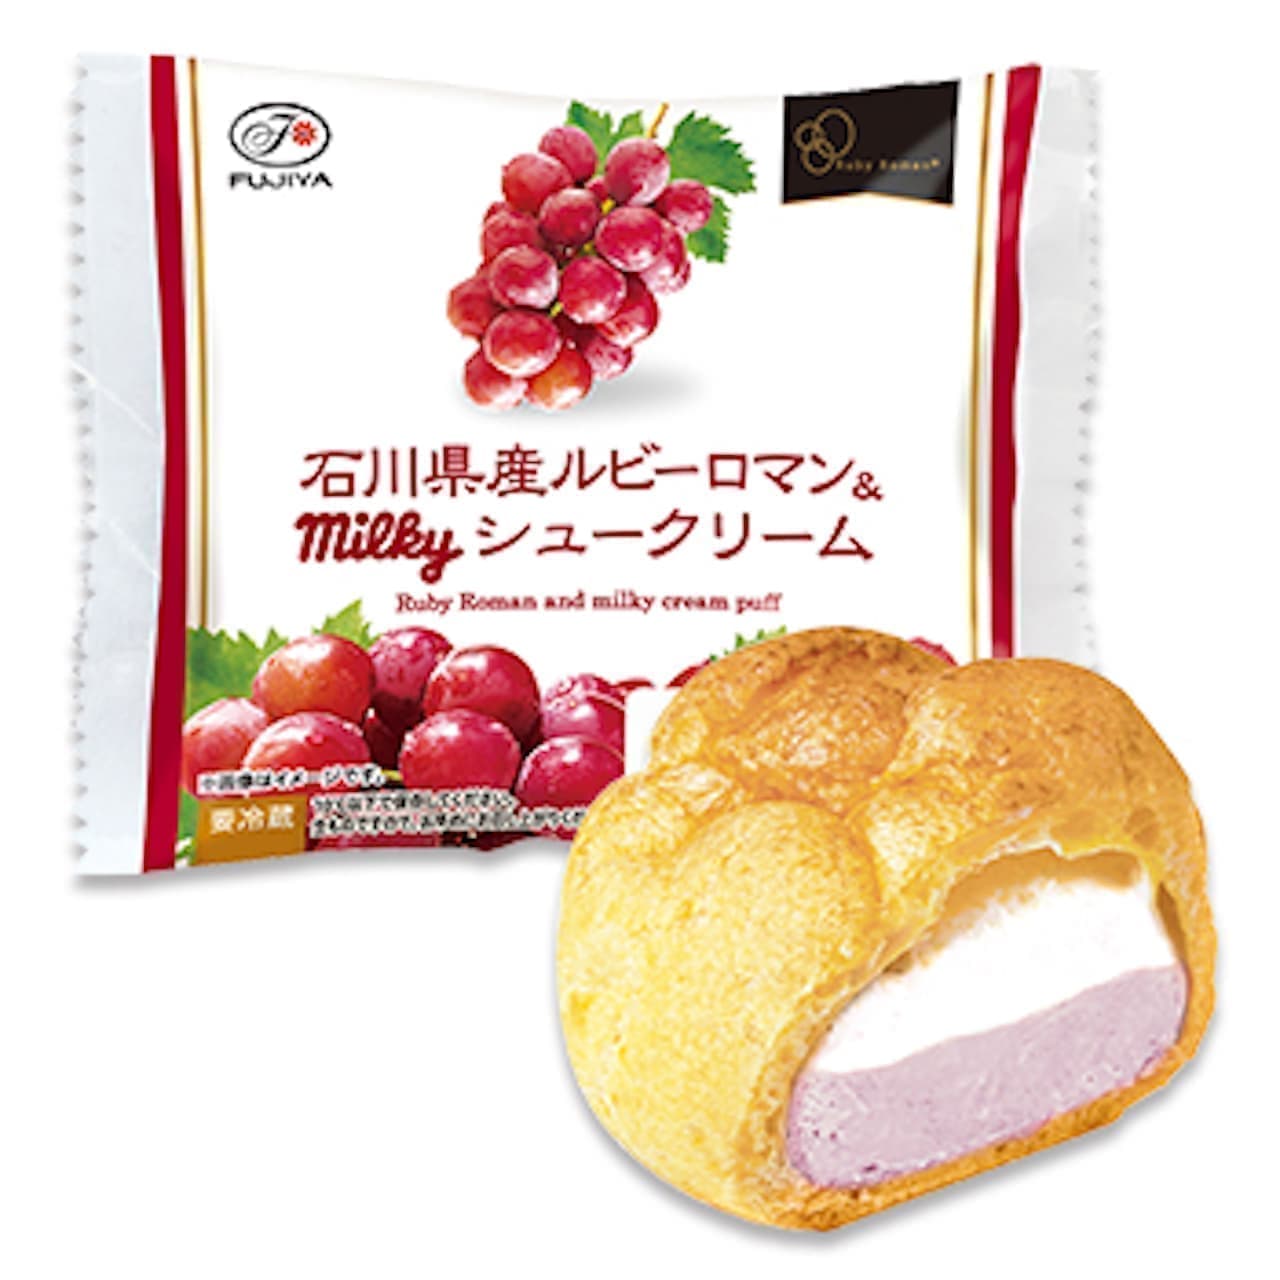 Fujiya "Ishikawa Ruby Roman & Milky Cream Puff".